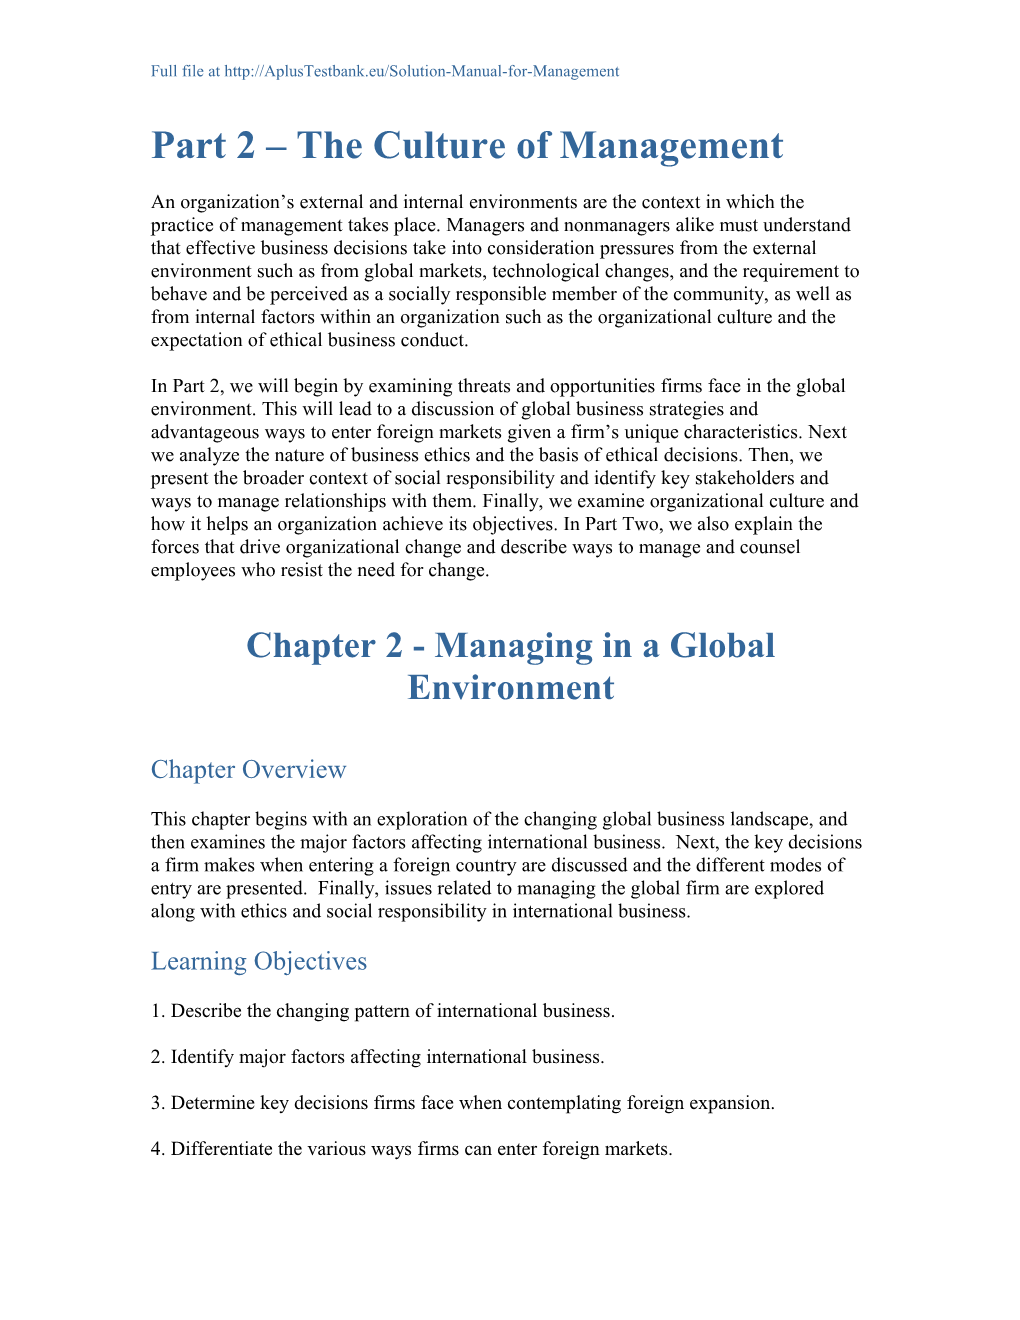 Part 2 the Culture of Management